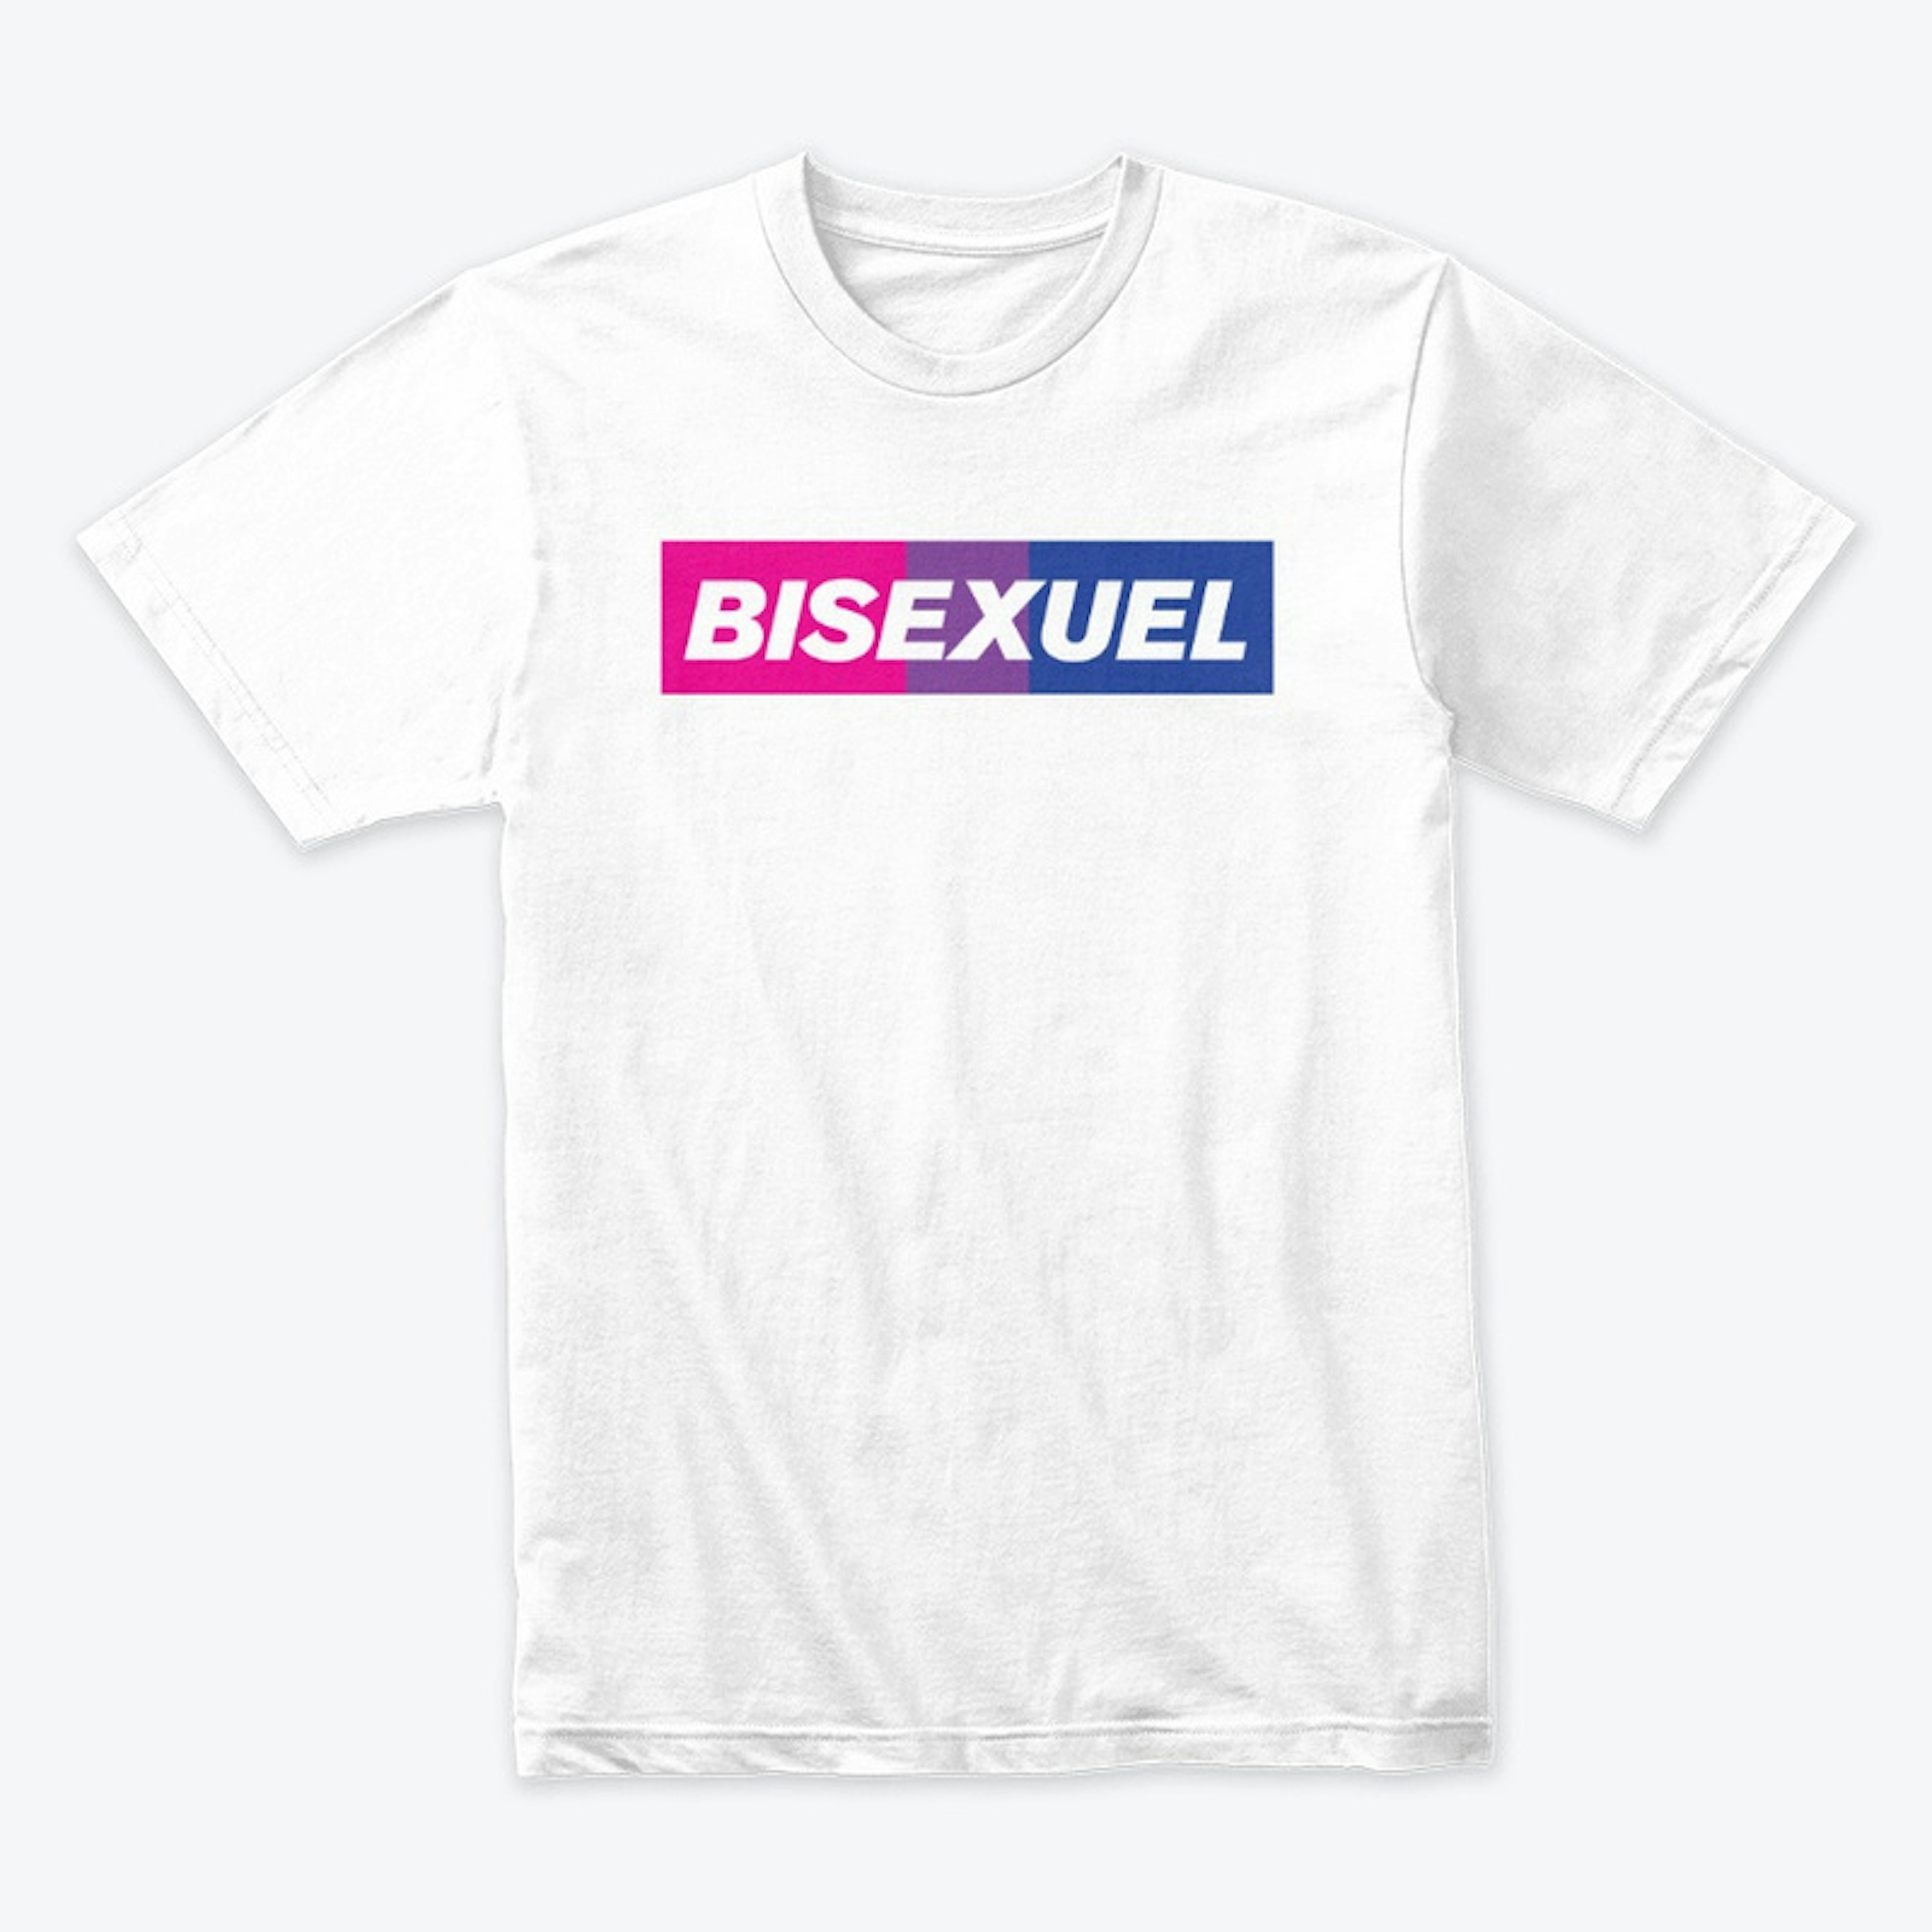 Bisexuel - male